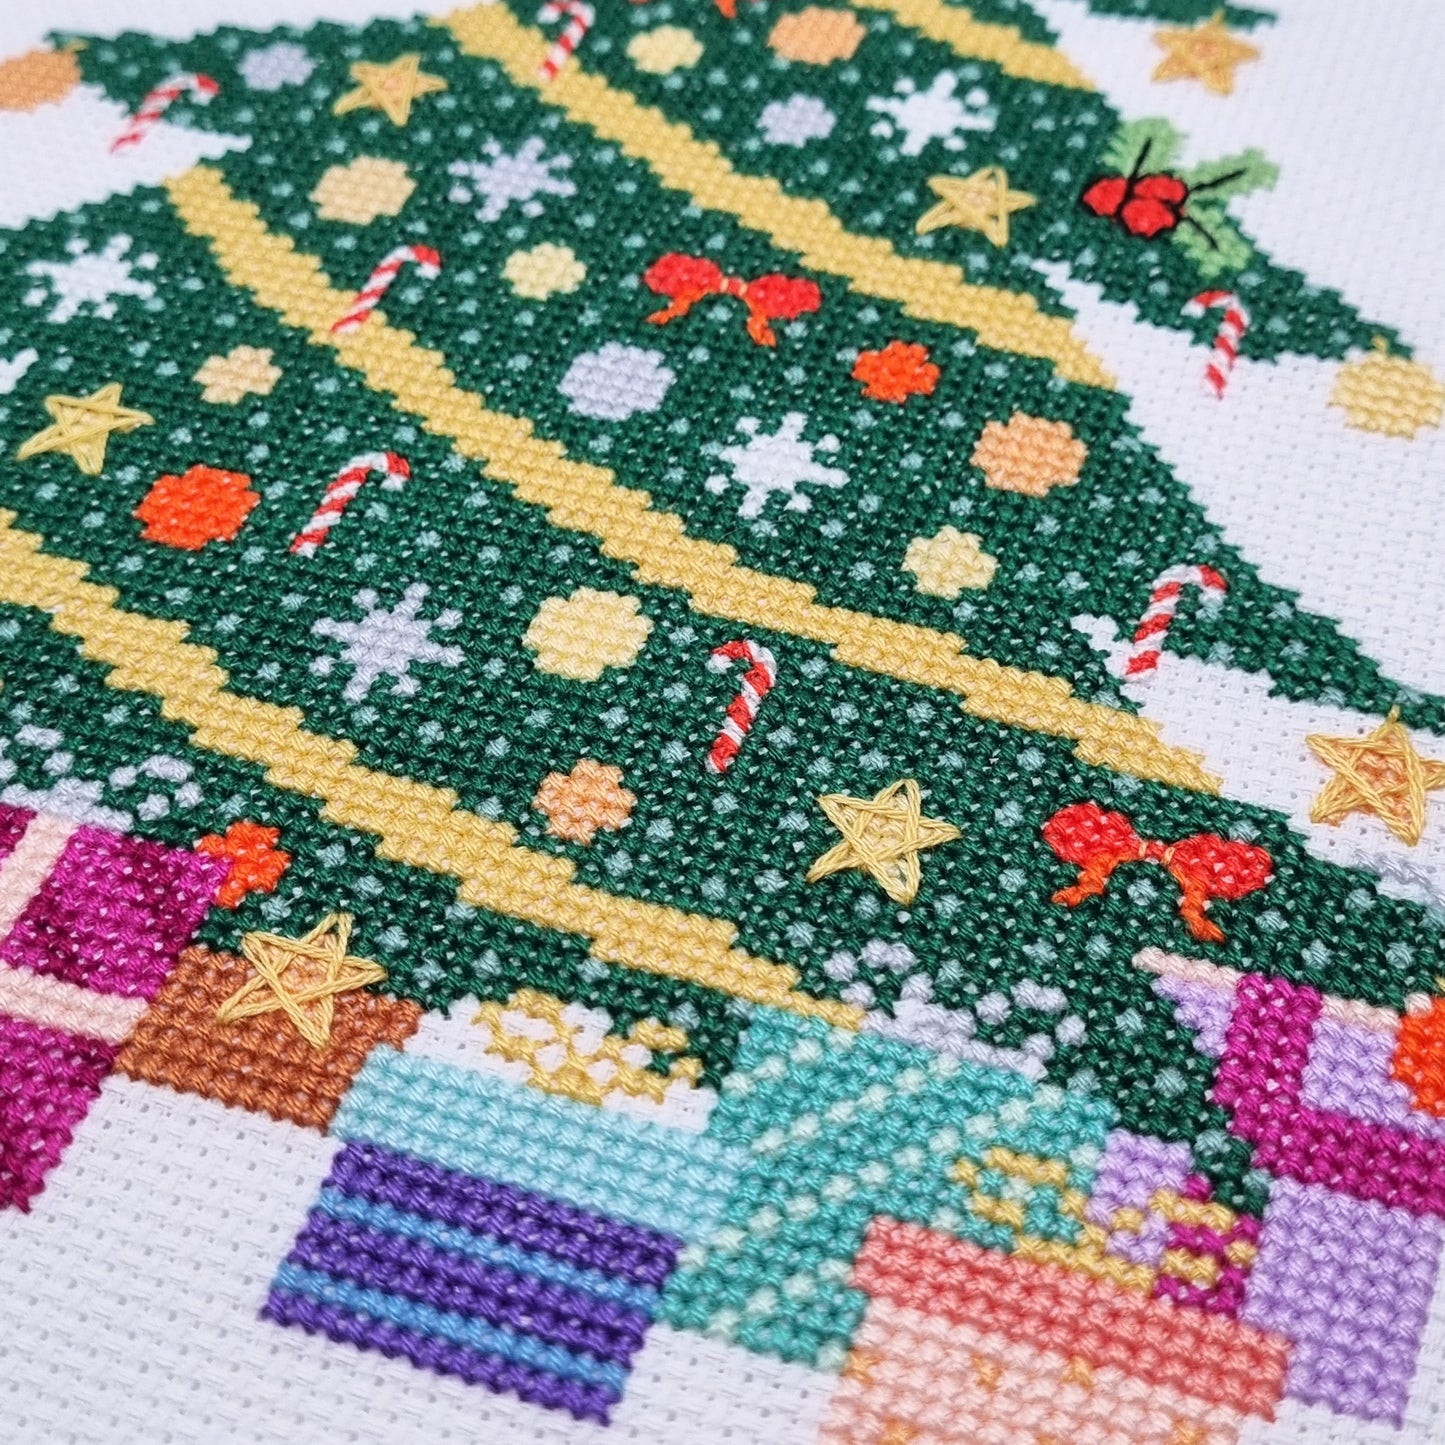 Christmas Tree Cross Stitch Kit